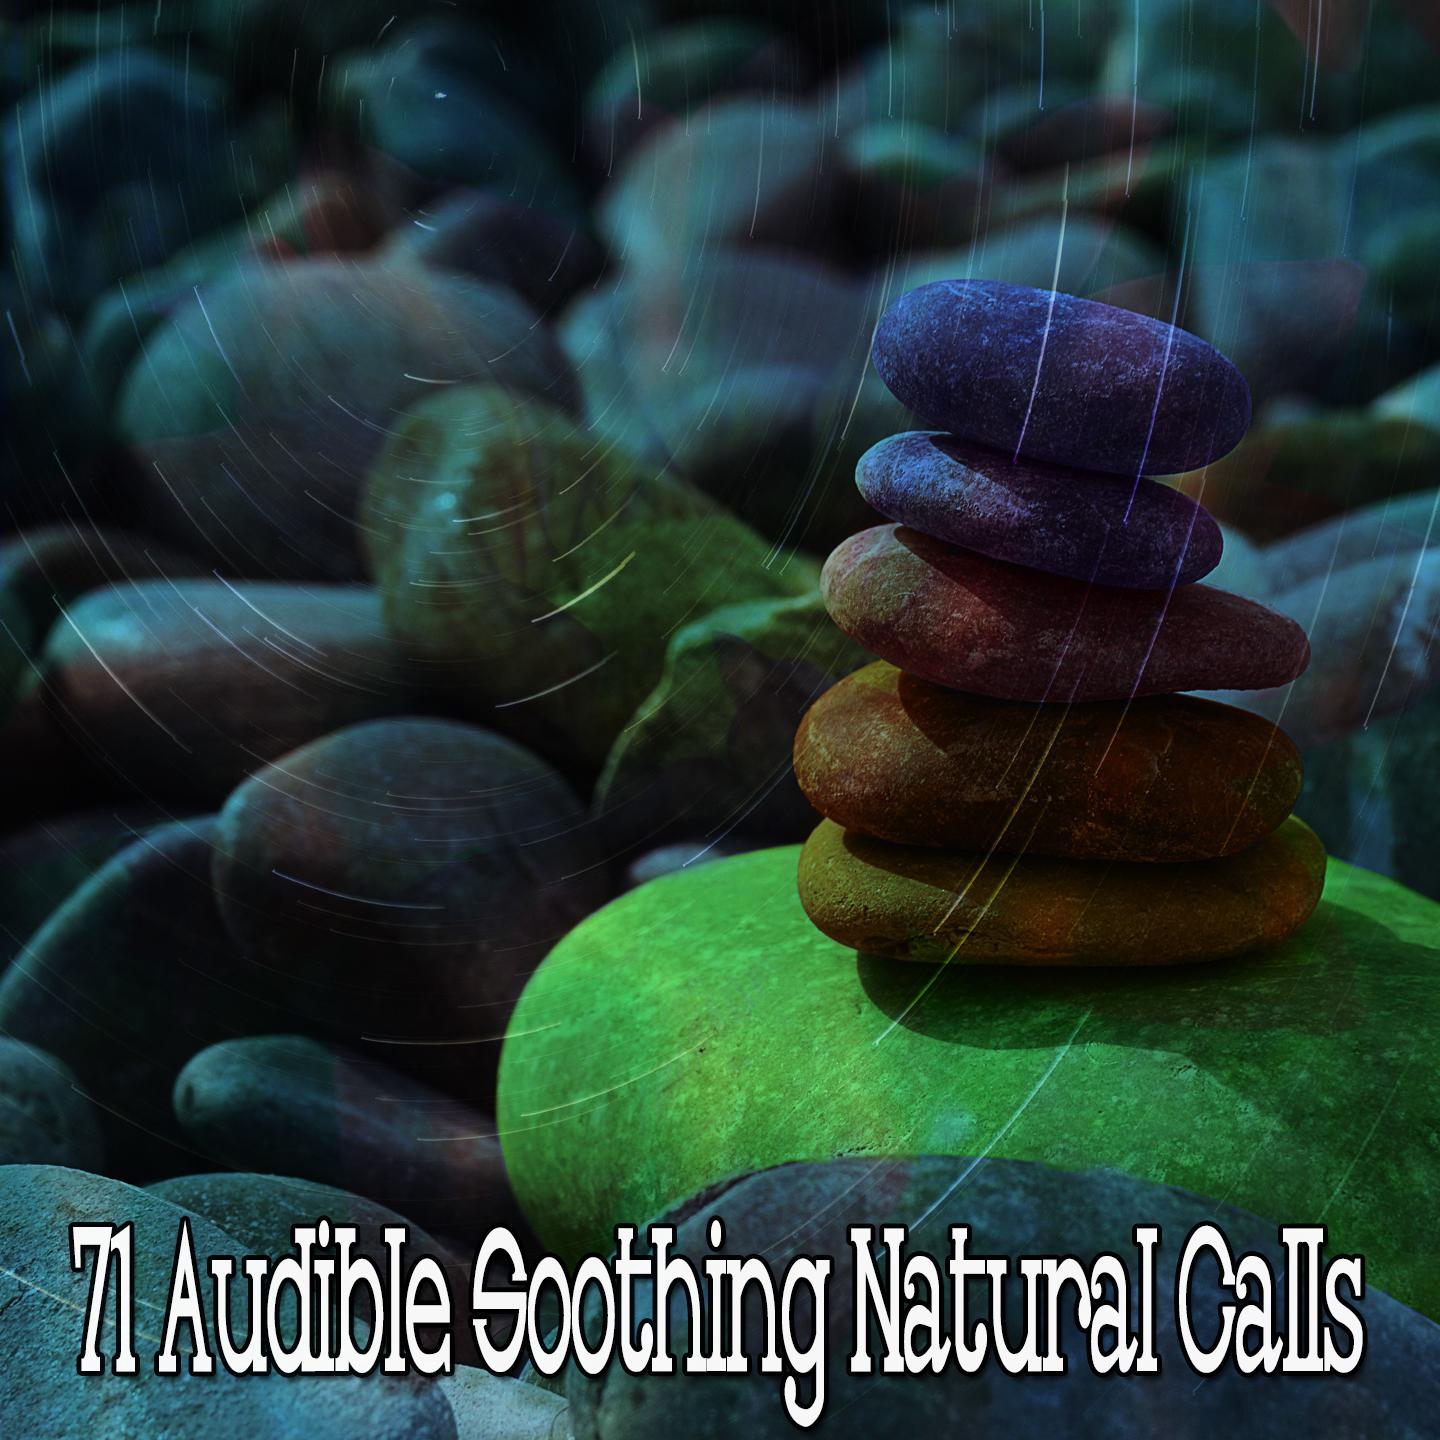 71 Audible Soothing Natural Calls